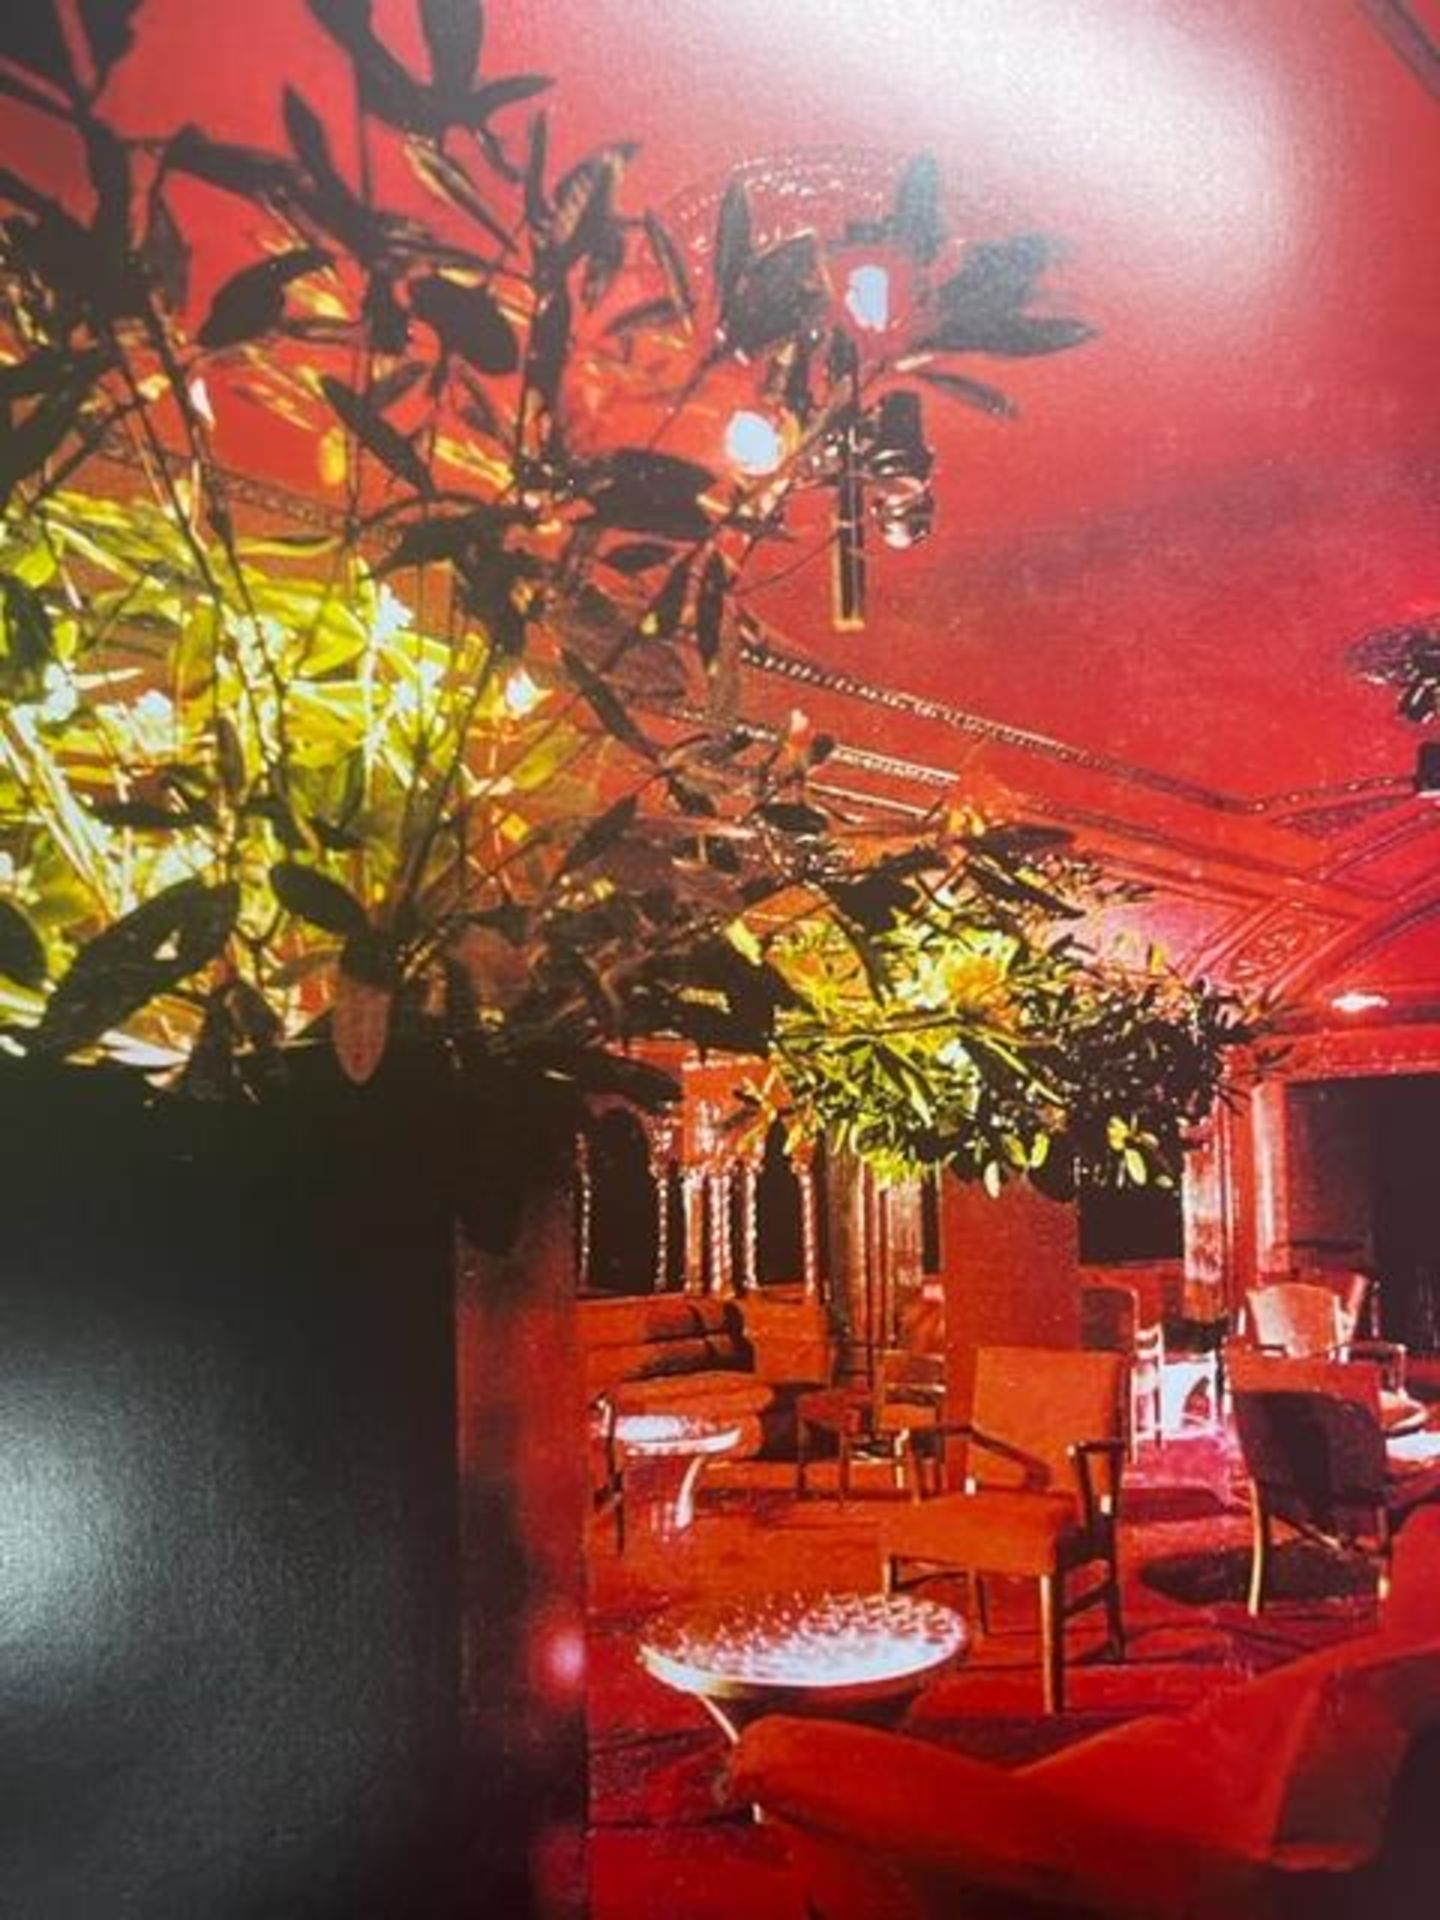 Studio 54 "Monochromatic Lounge" Print.